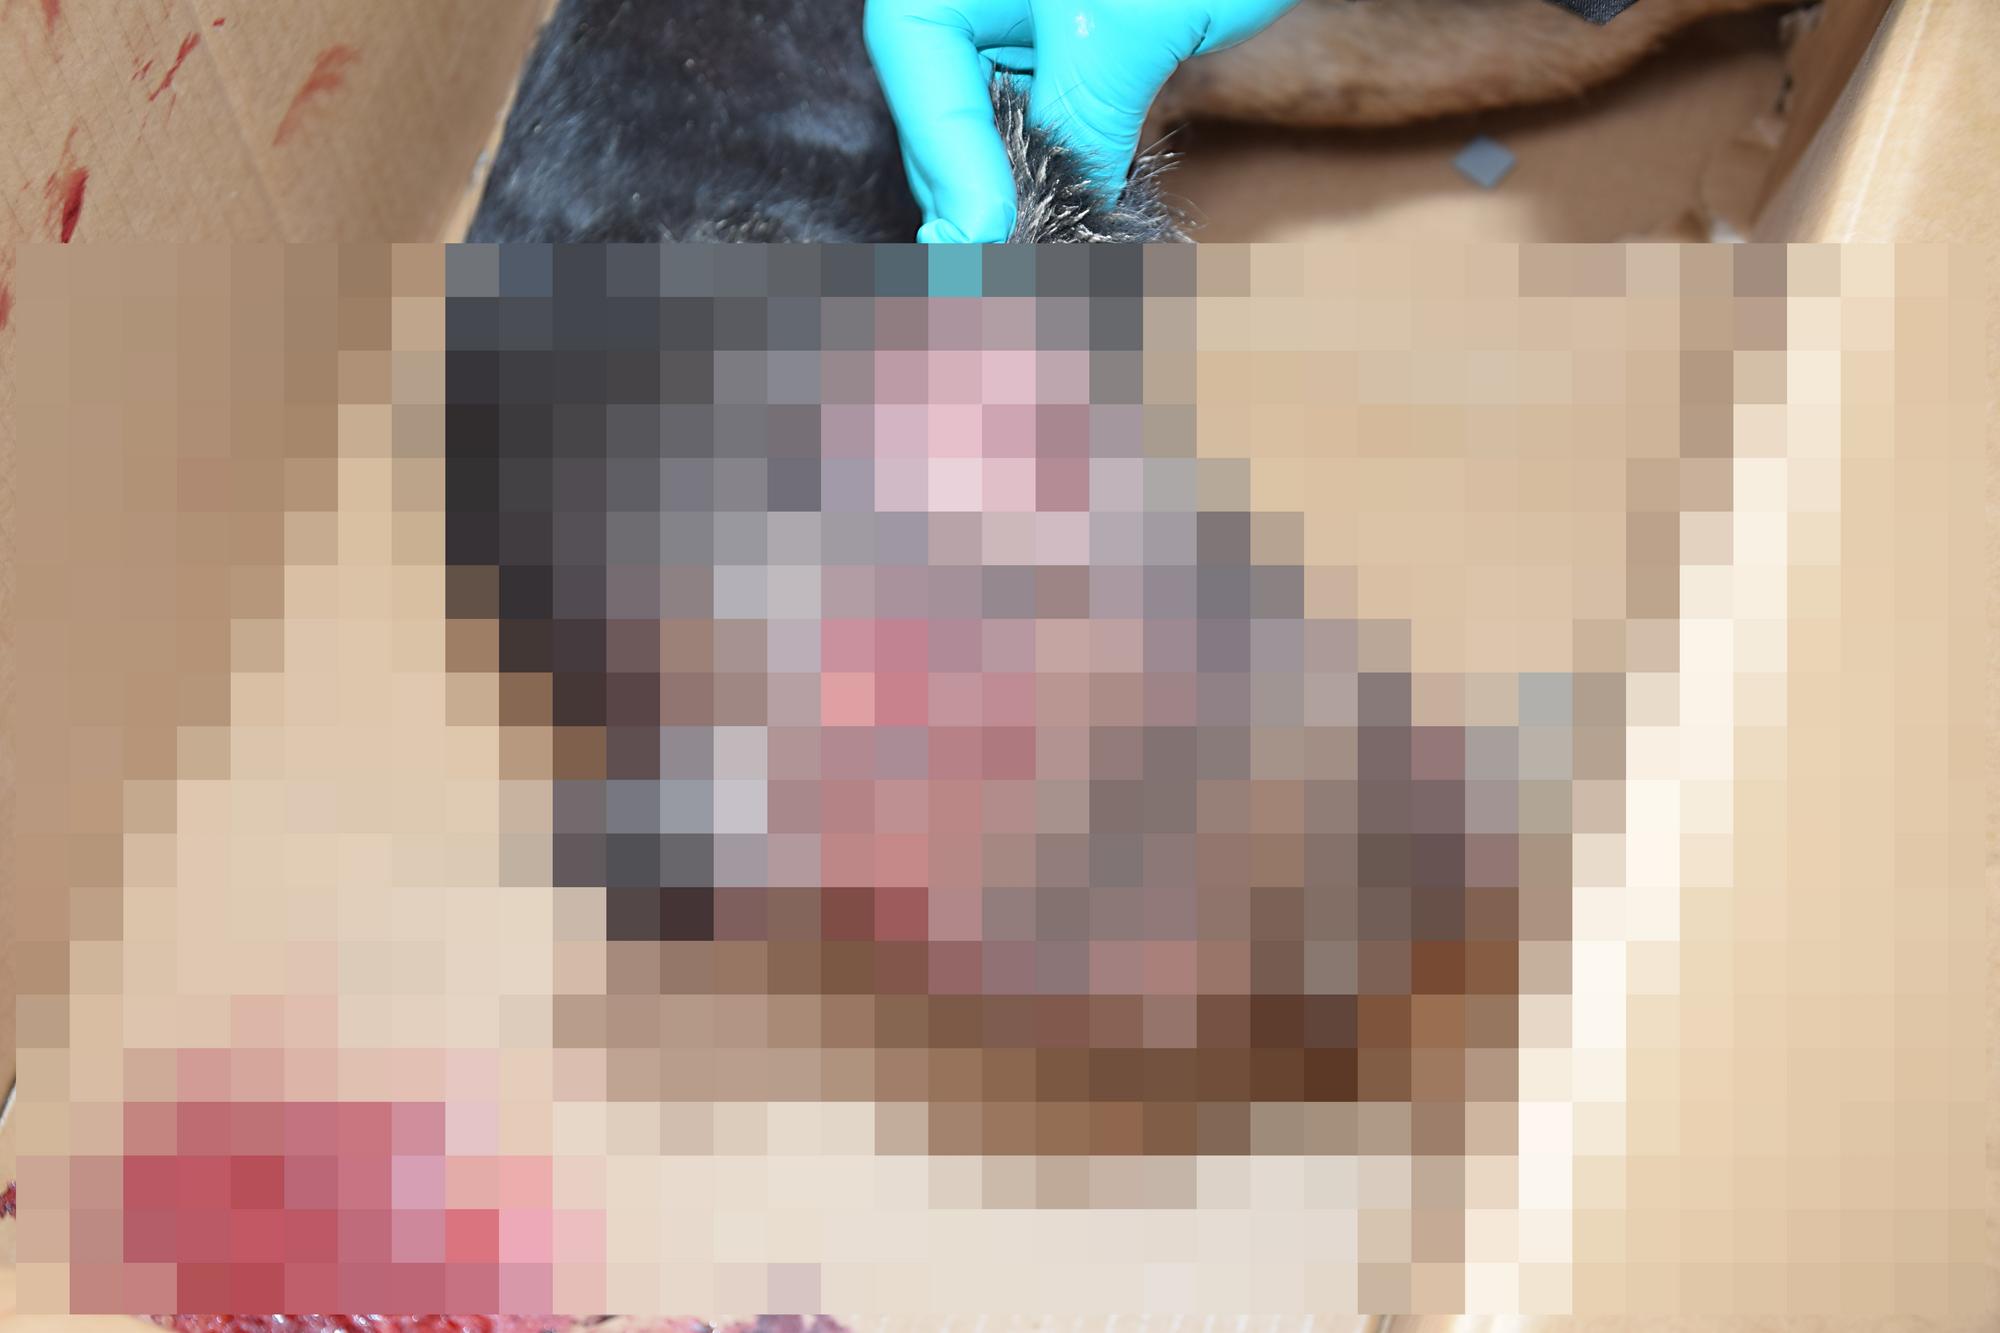 Brutálny čin muža z obce Dolný Štál: Dvojročného psa zabil roxorovou tyčou